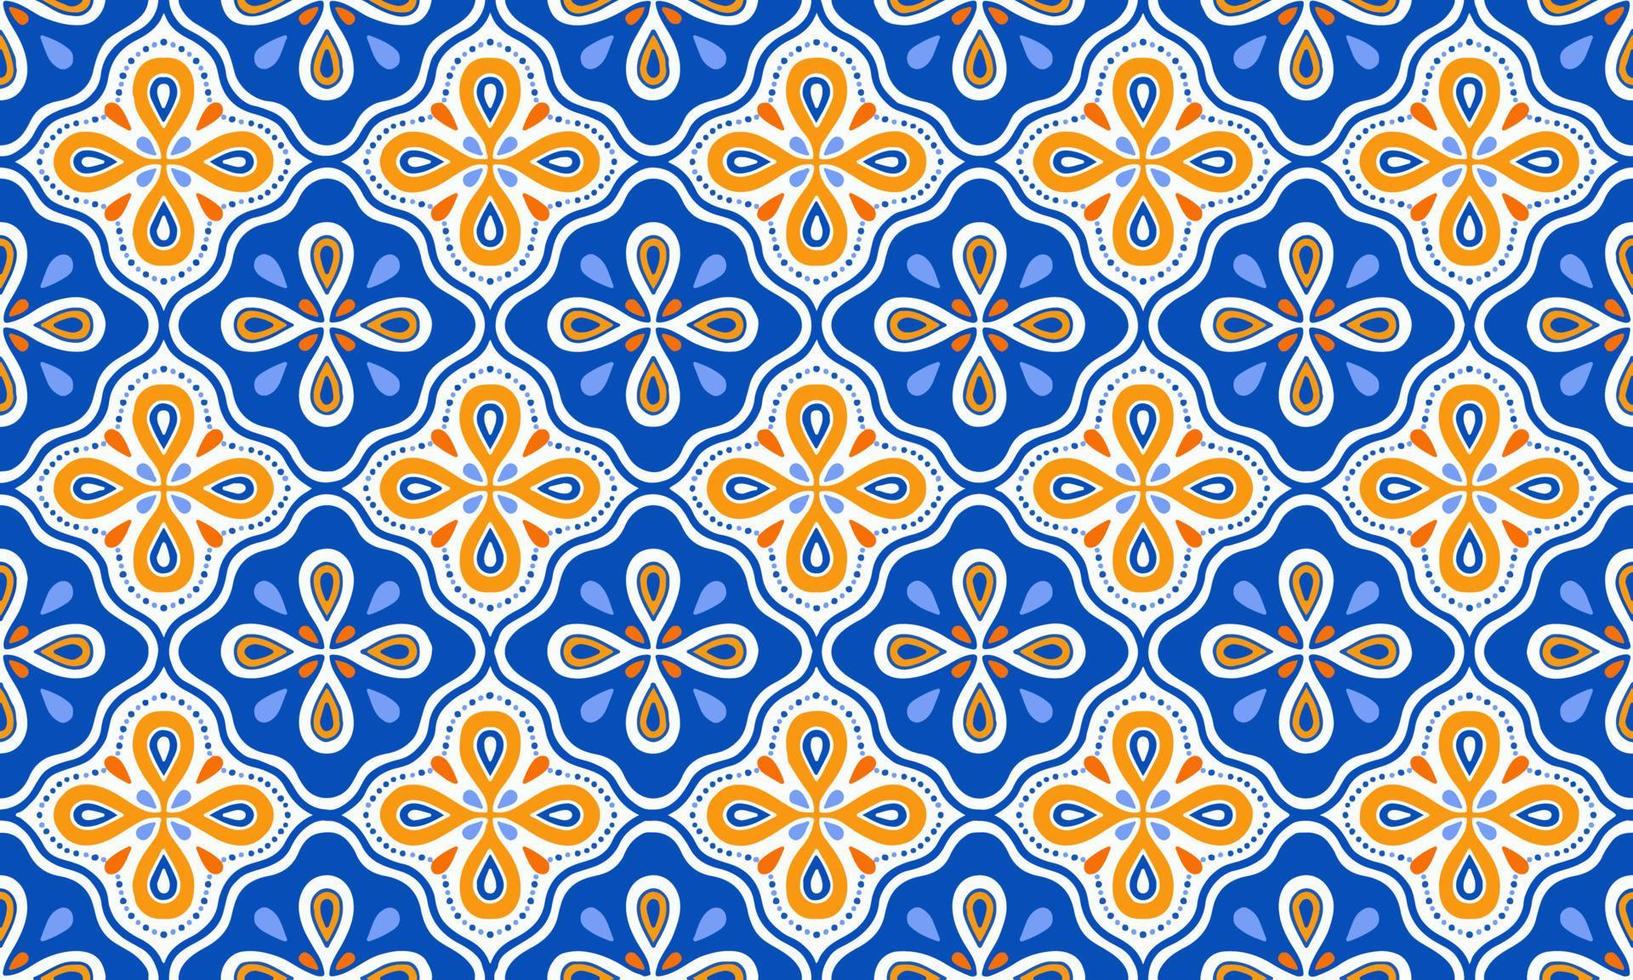 étnico abstrato fundo fofa laranja azul flor geométrico tribal ikat folk motivo árabe oriental nativo padronizar tradicional Projeto tapete papel de parede roupas tecido invólucro impressão batik folk vetor